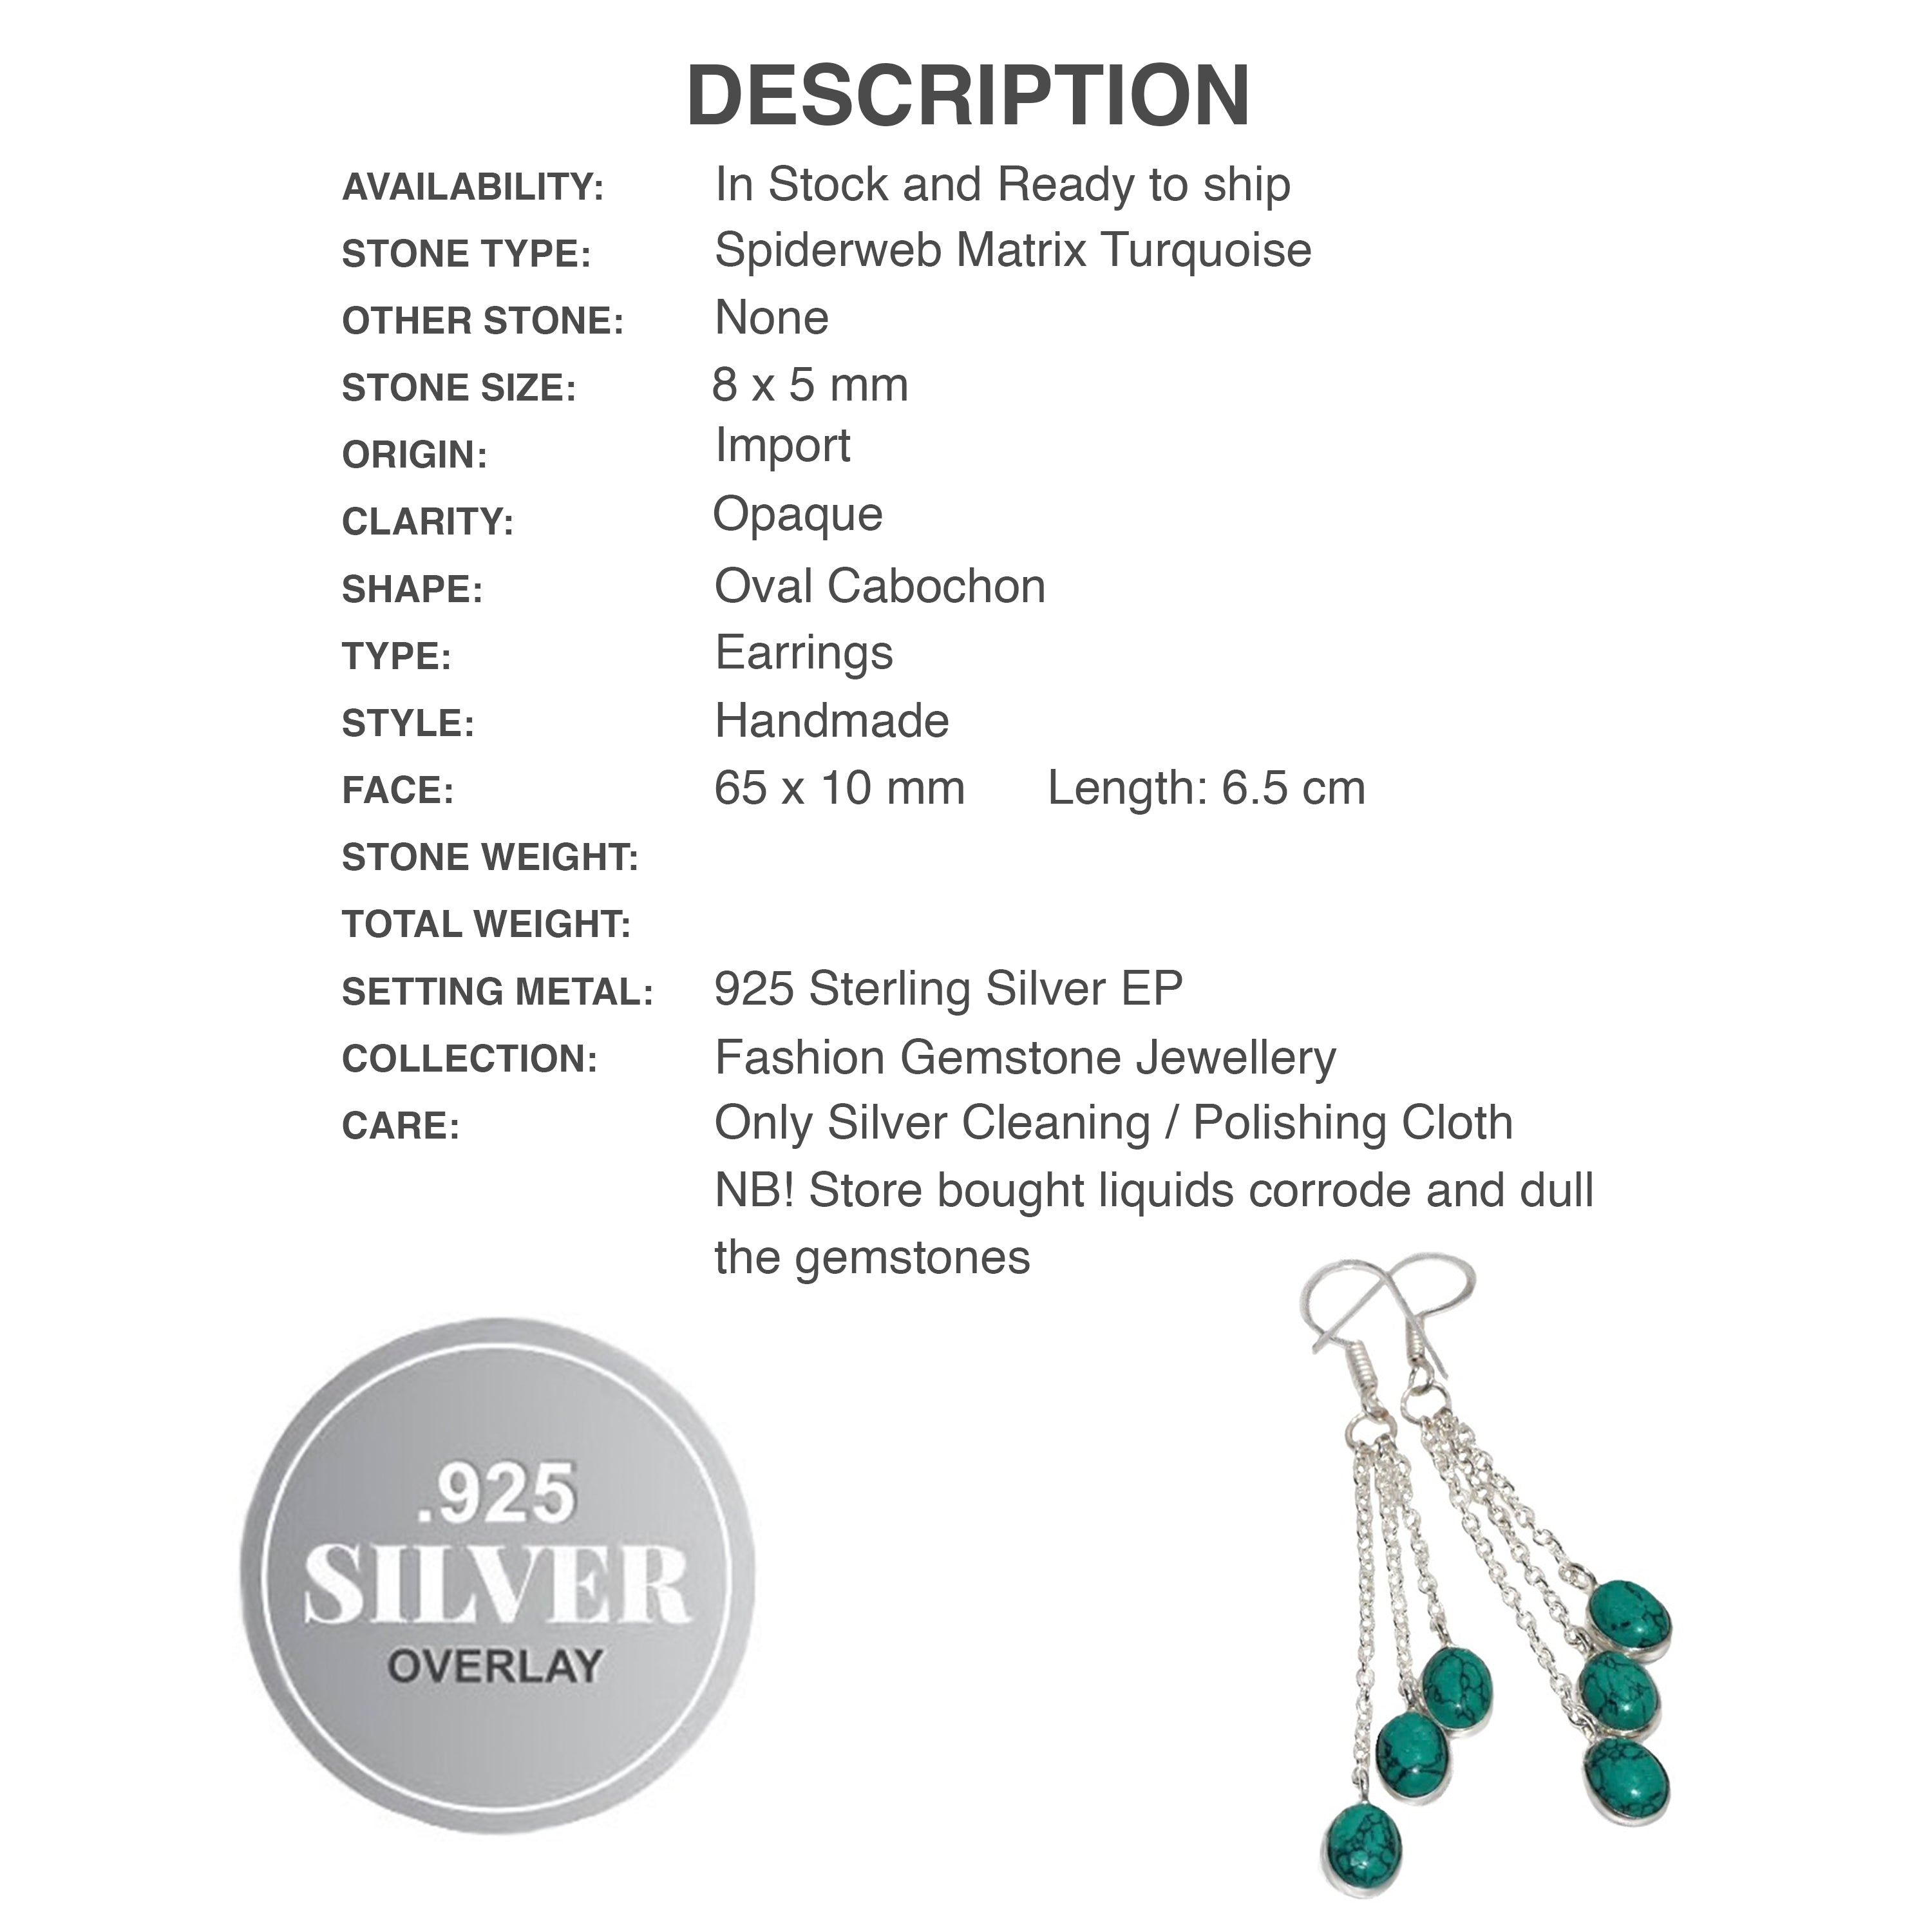 Spider Web Matrix Turquoise Gemstone .925 Sterling Silver Earrings - BELLADONNA